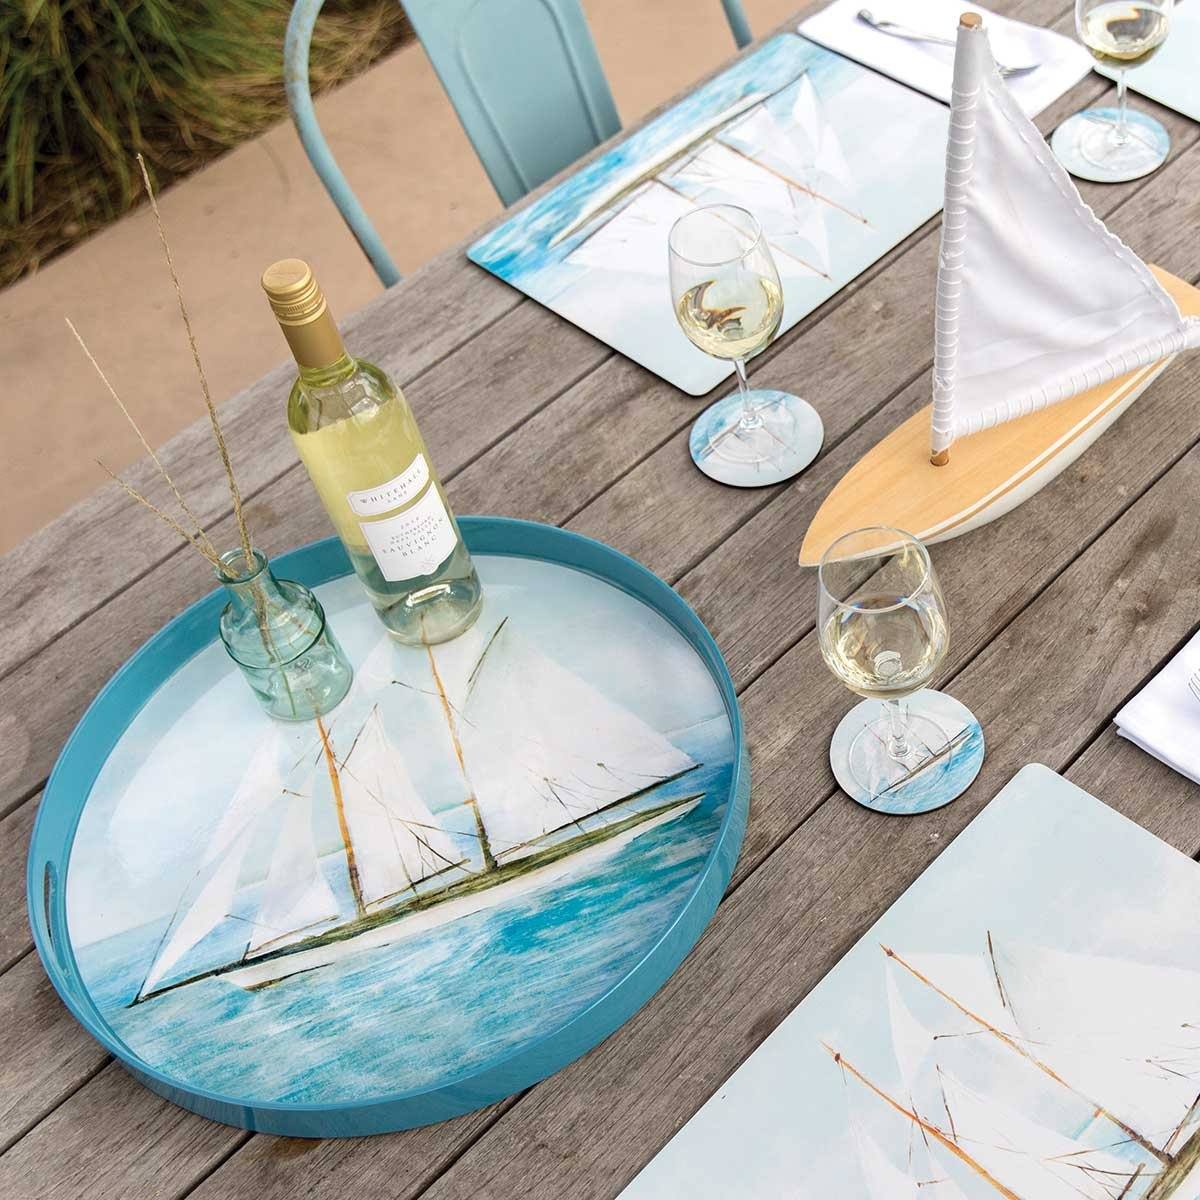 Summer Sail Round Art Coasters - Set of 4 Coaster - rockflowerpaper